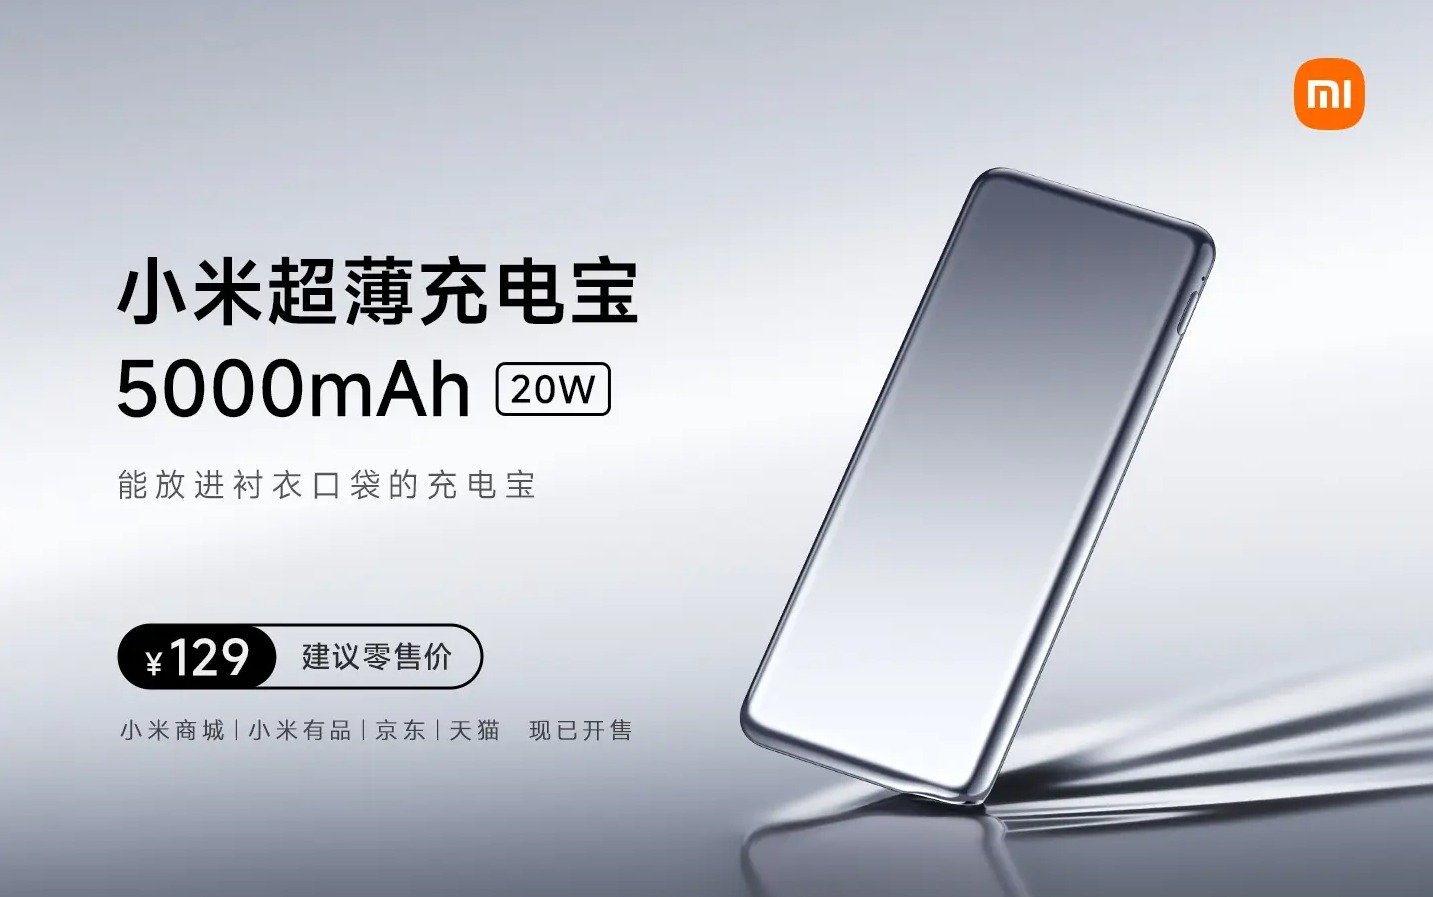 Xiaomi Ultra-Tunn Power Bank 5000mAh